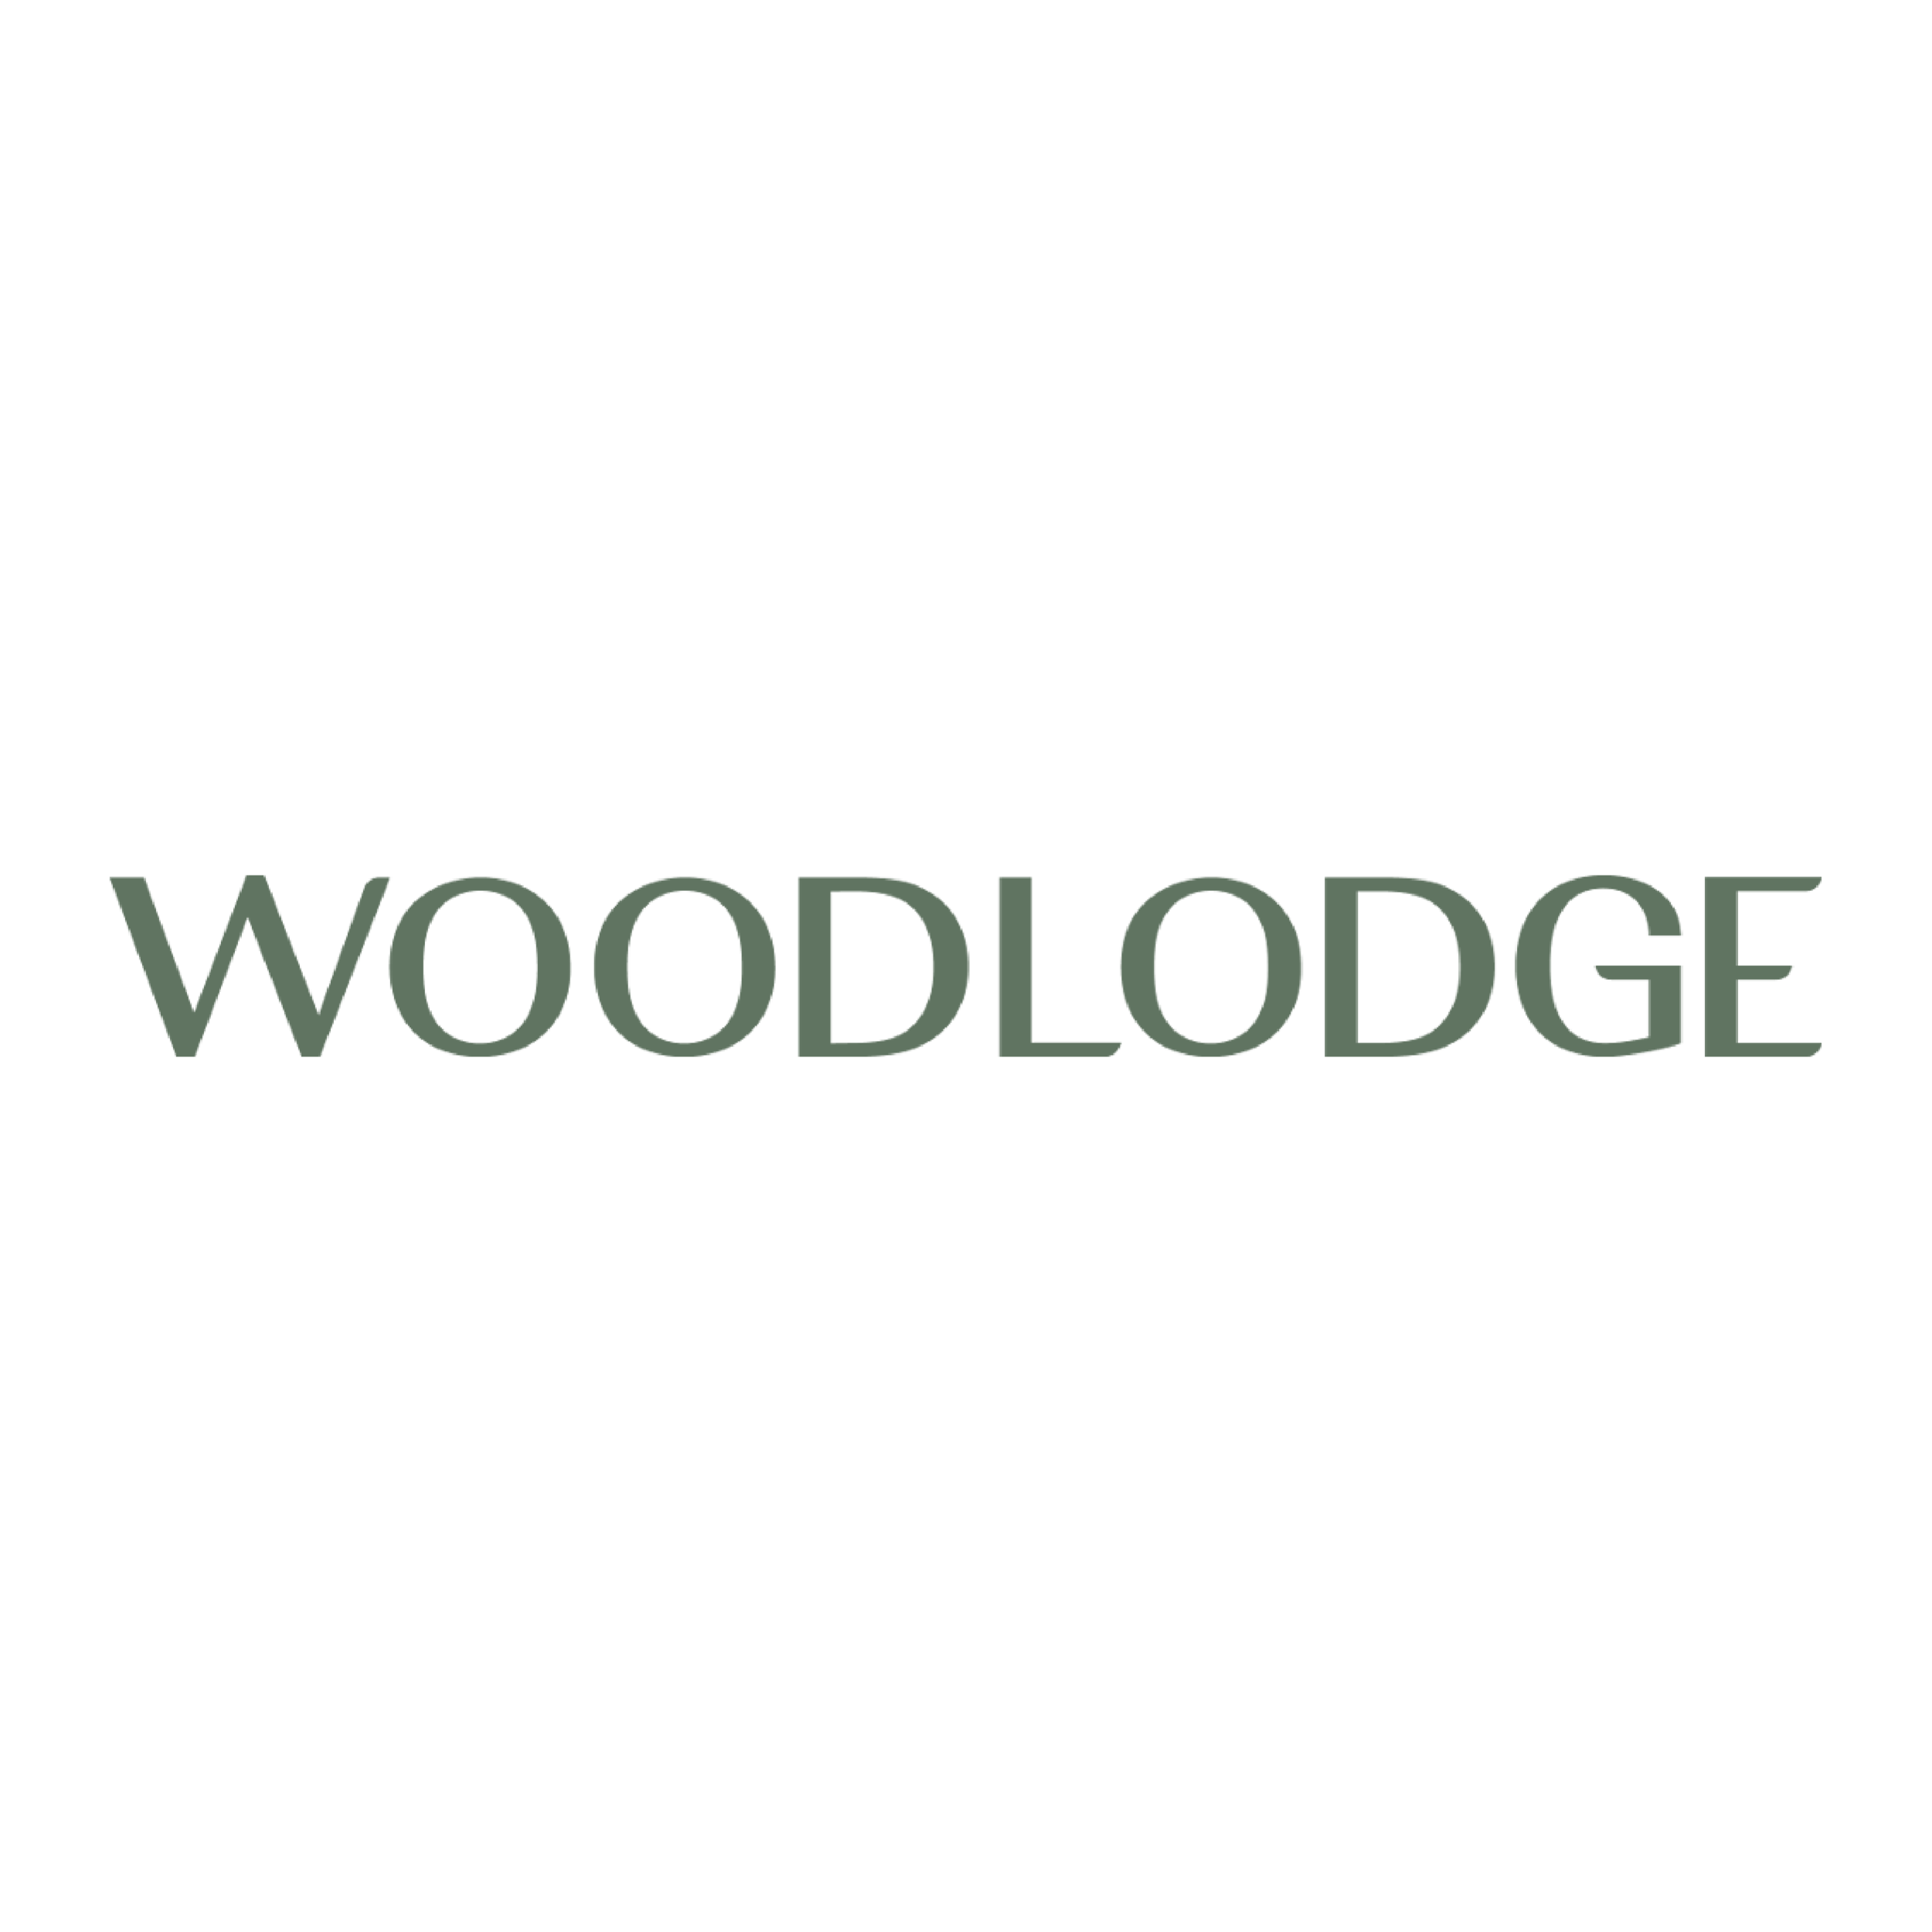 Woodlodge company name logo